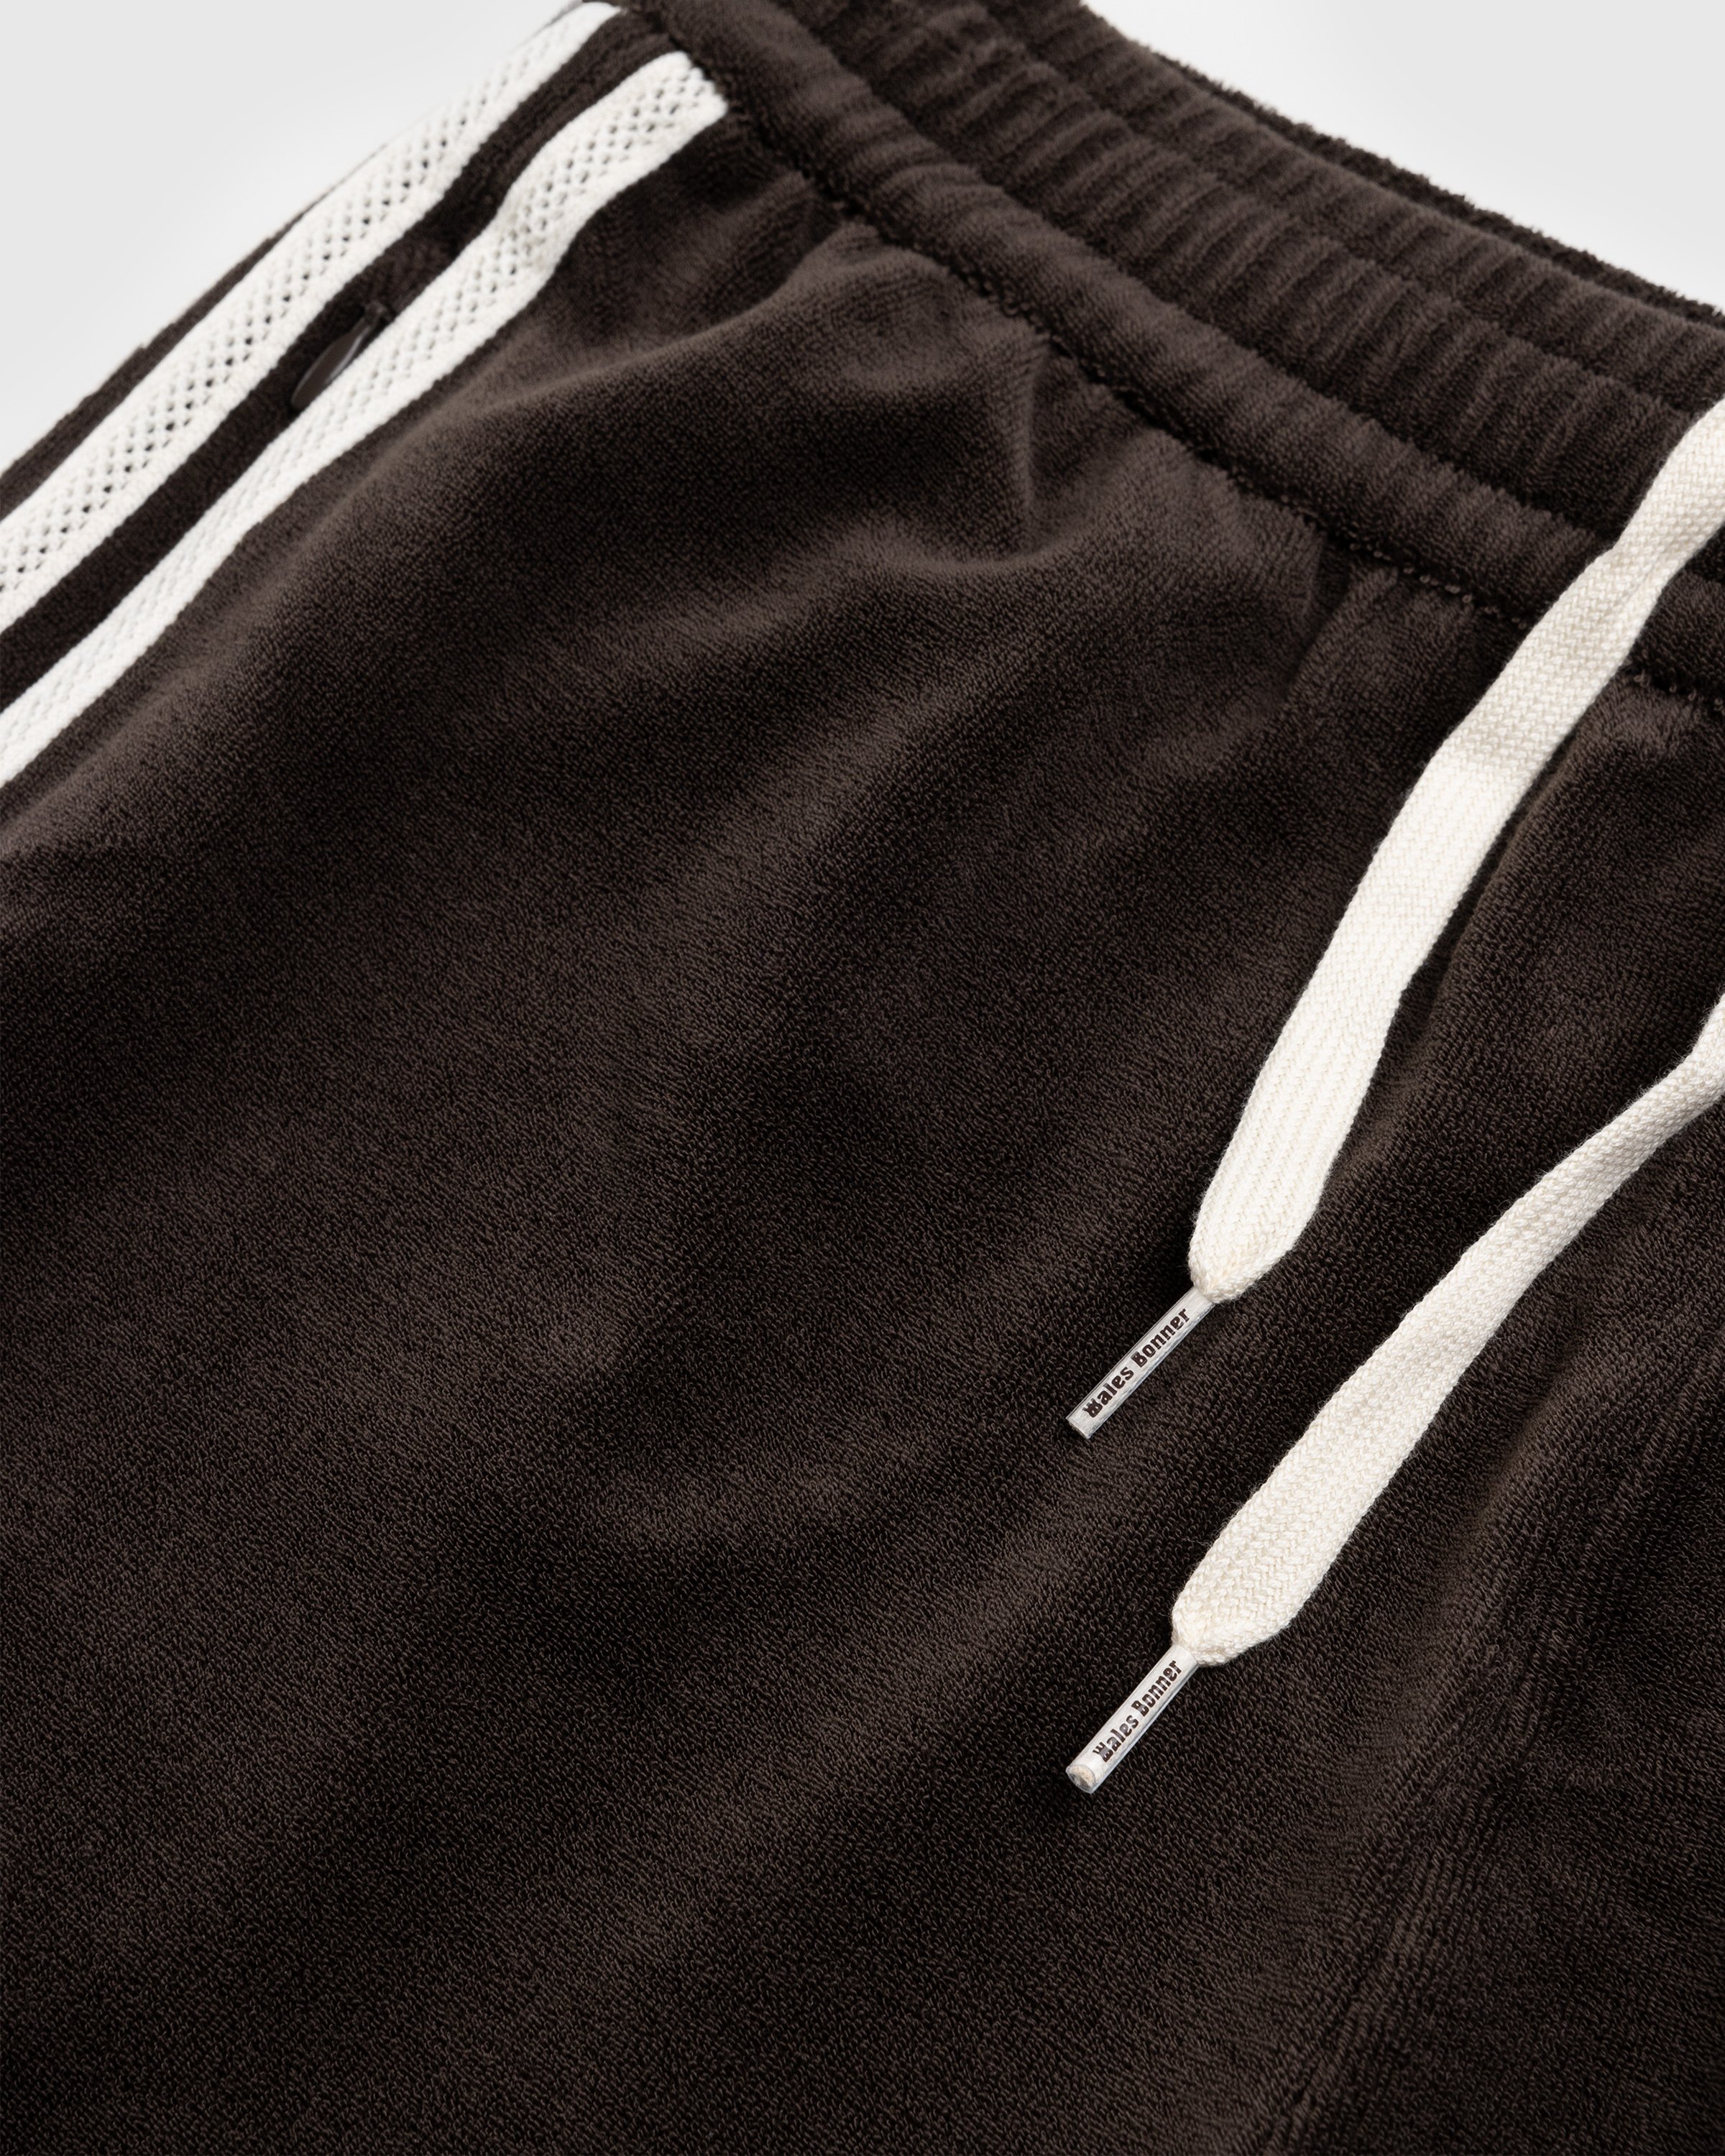 Adidas x Wales Bonner - Cotton Blend Shorts Dark Brown - Clothing - Brown - Image 4